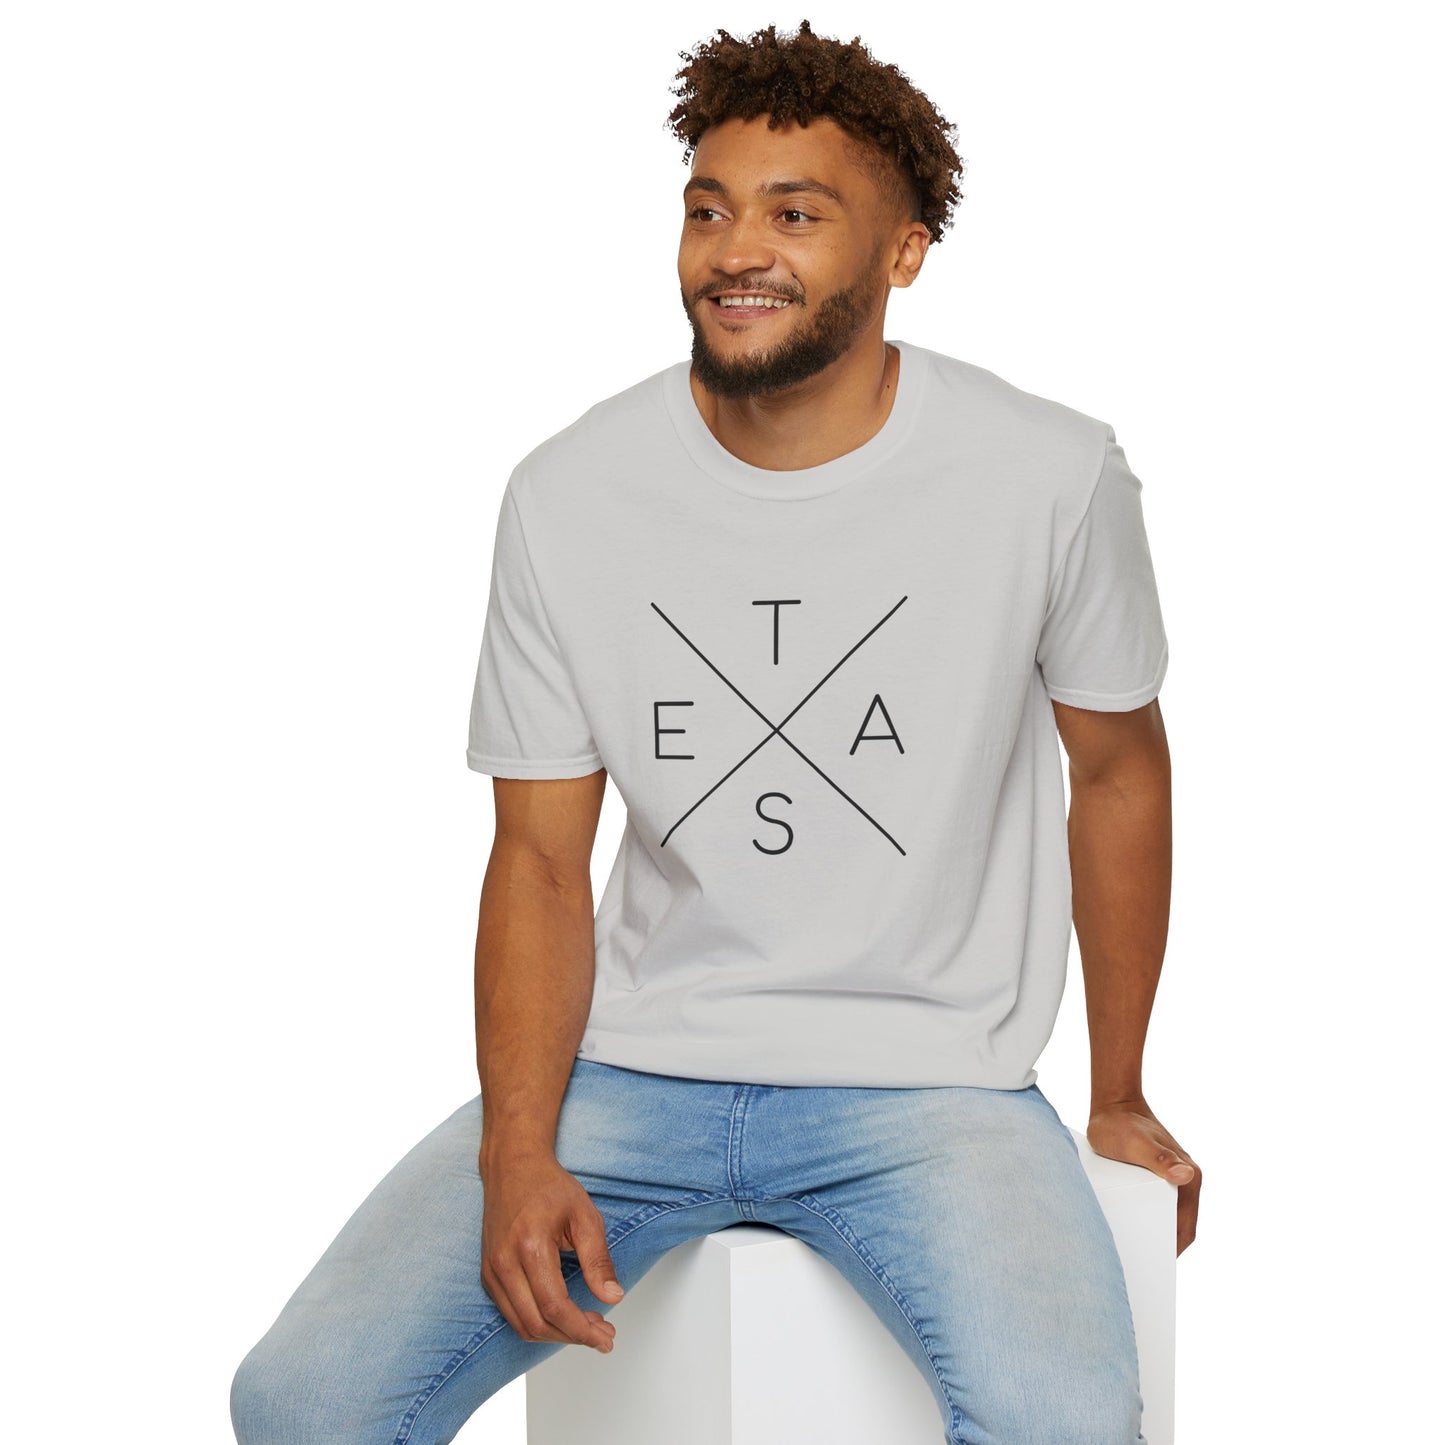 Texas X Unisex T-Shirt